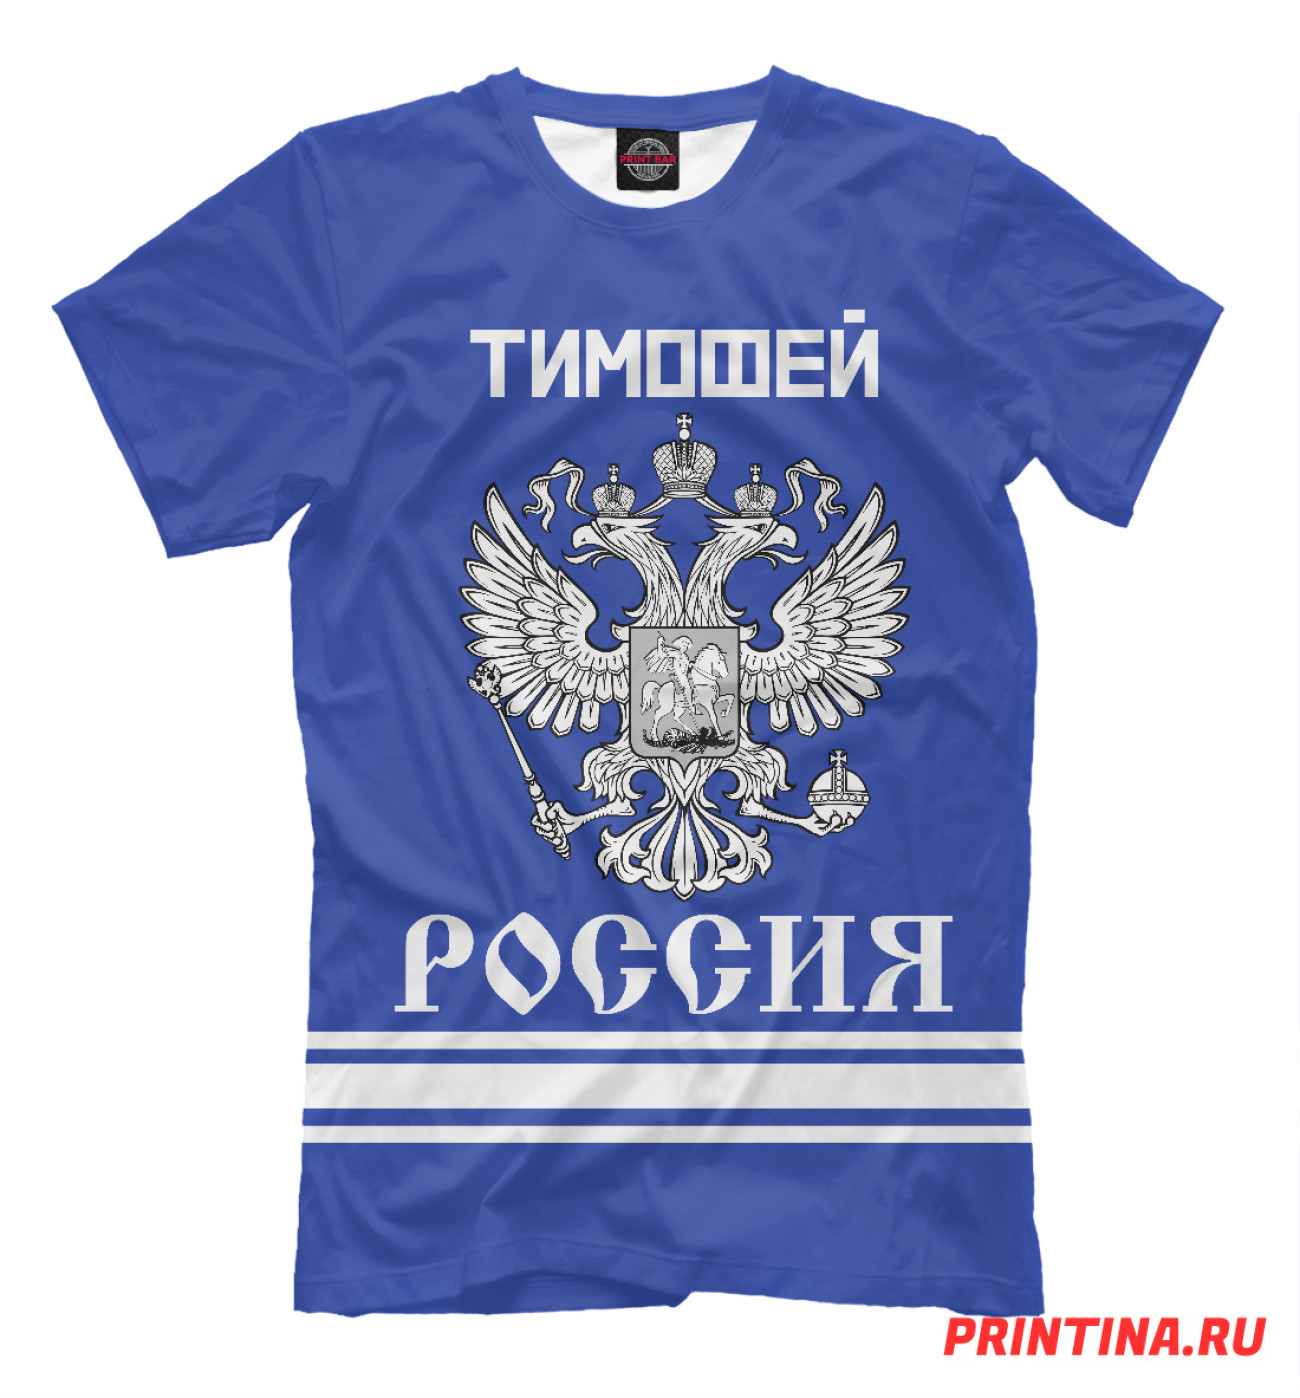 Мужская Футболка ТИМОФЕЙ sport russia collection, артикул: TMF-247508-fut-2